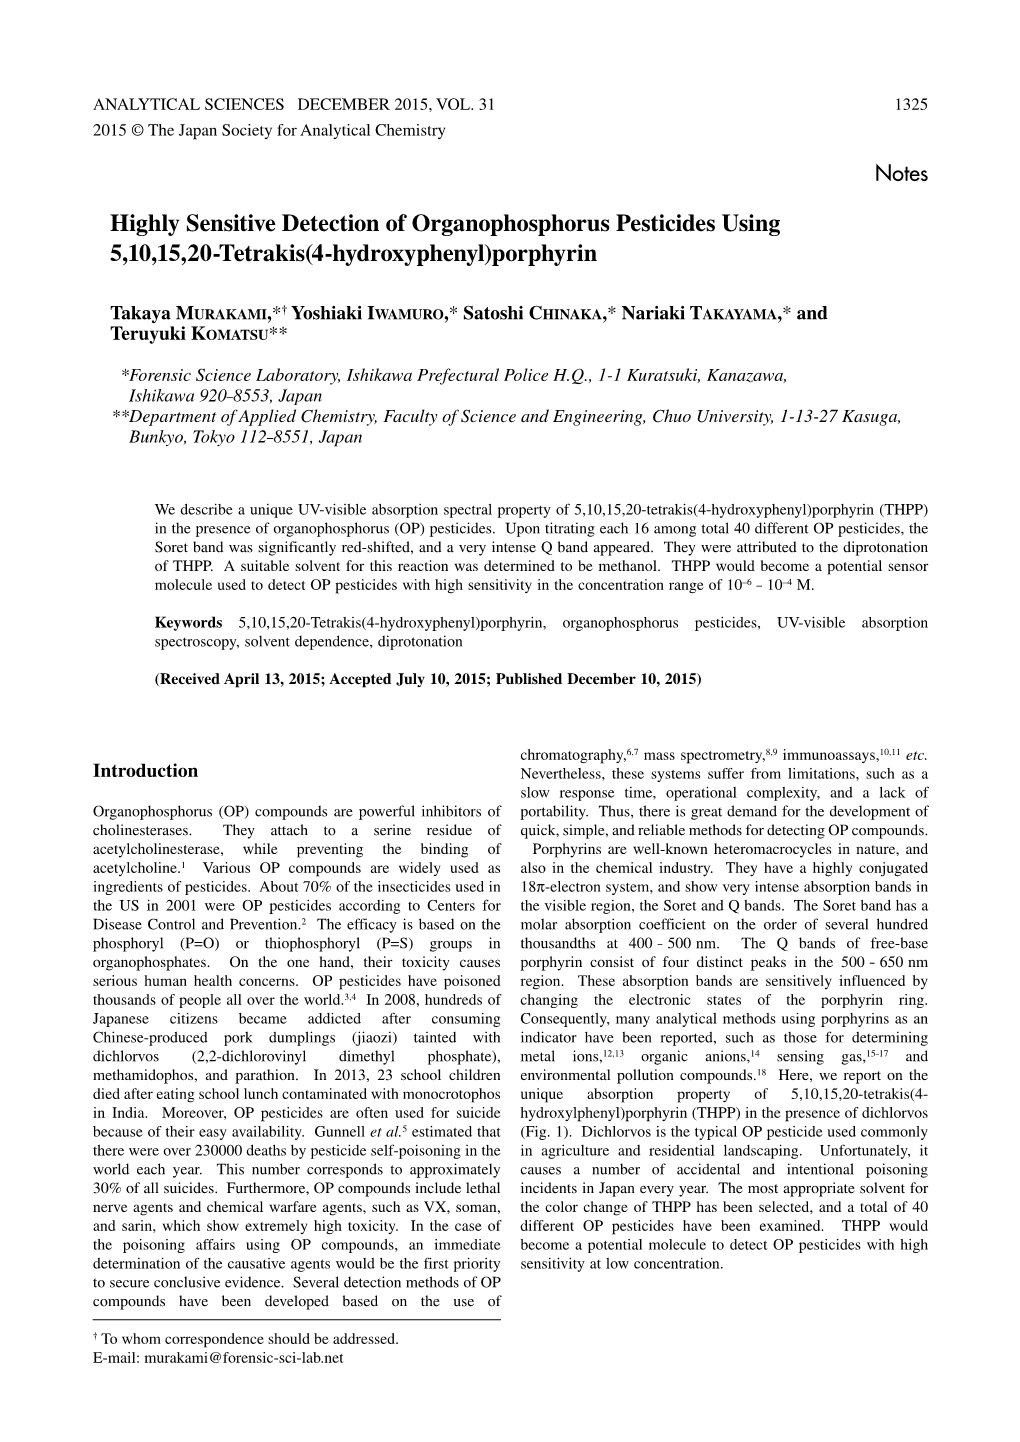 Highly Sensitive Detection of Organophosphorus Pesticides Using 5,10,15,20-Tetrakis(4-Hydroxyphenyl)Porphyrin